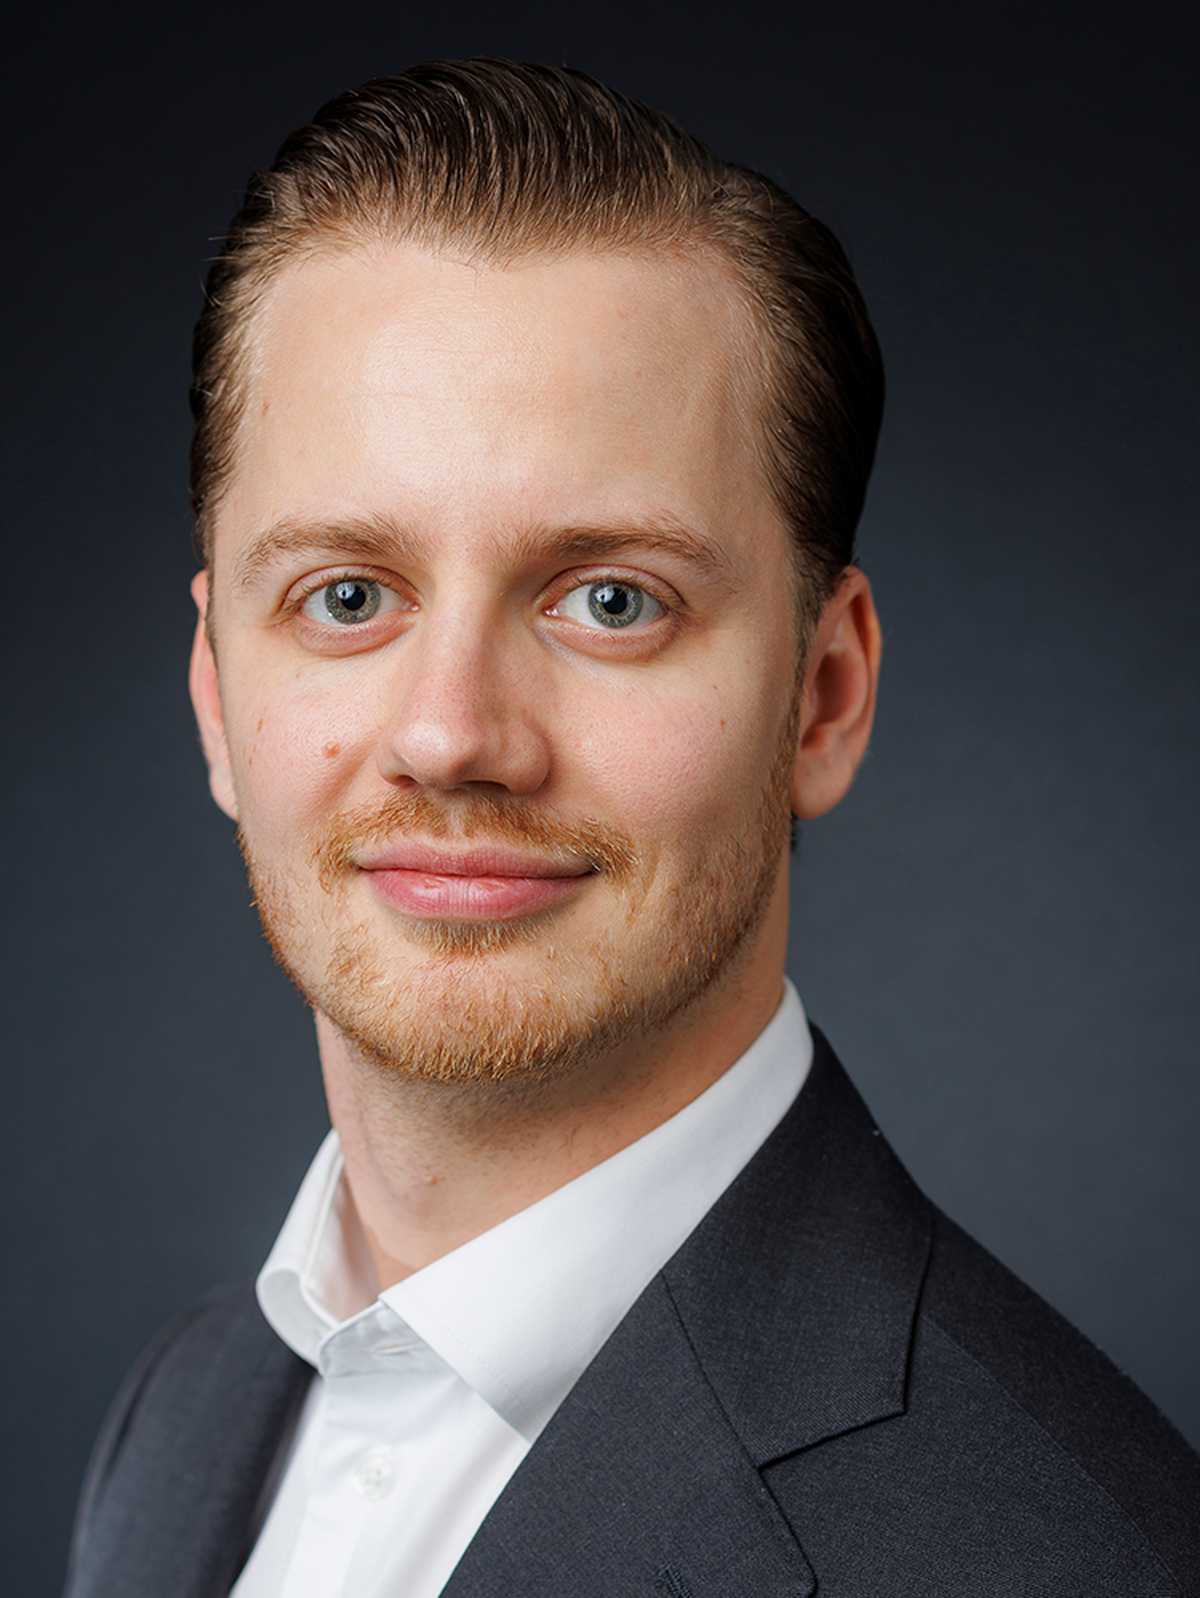 Philip Örtegren, Head of Sales Denmark